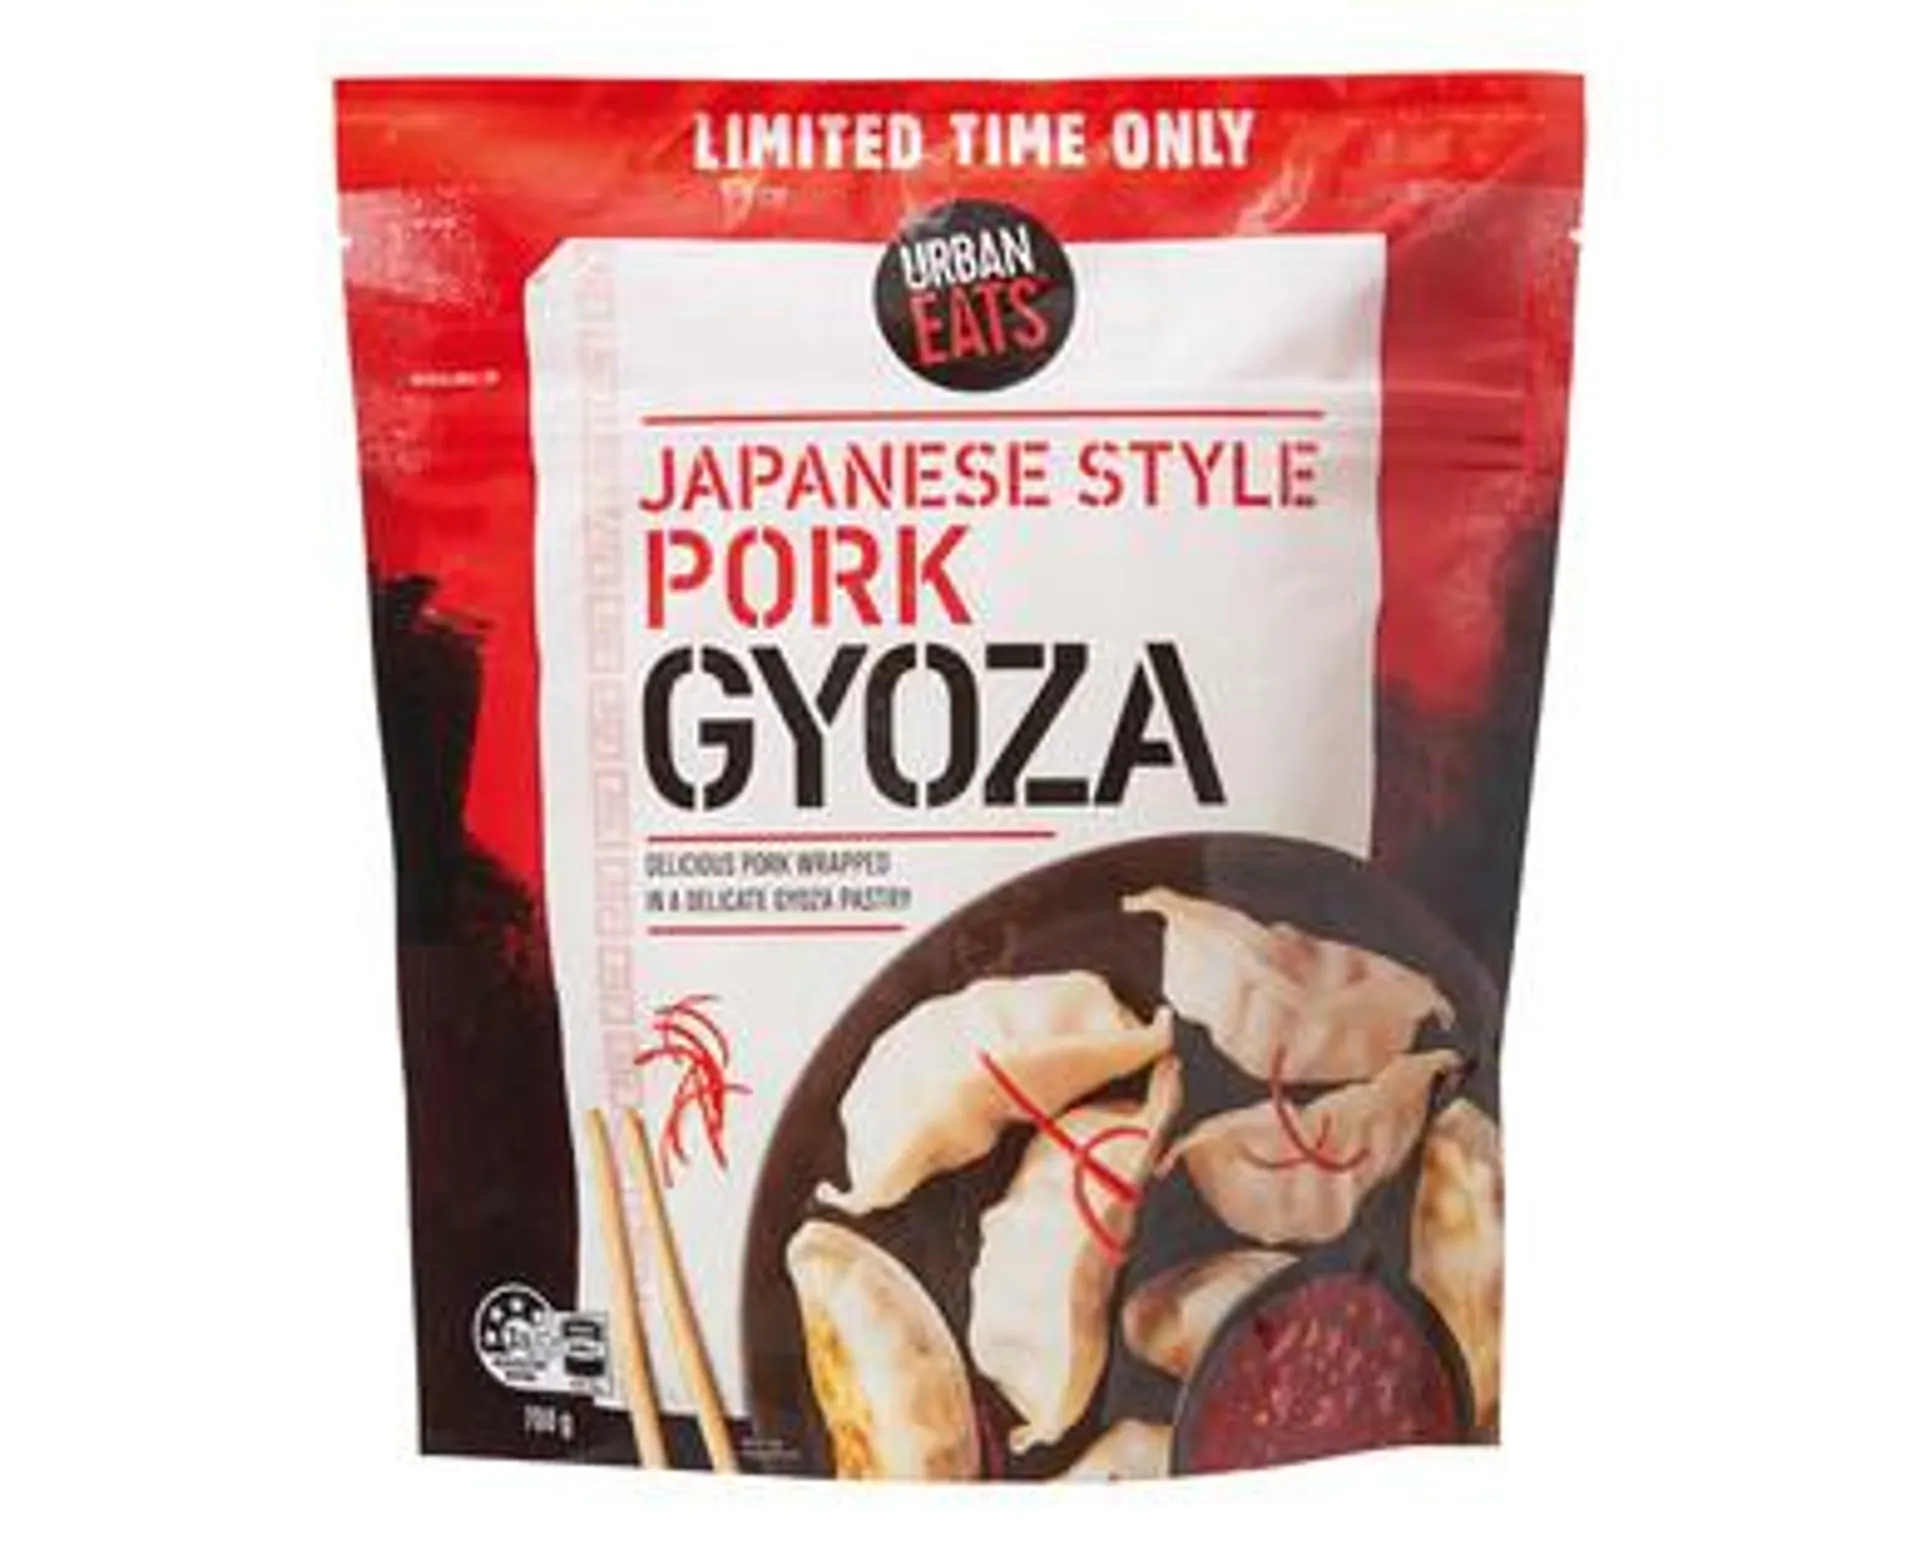 Urban Eats Gyoza Pork or Chicken 700g